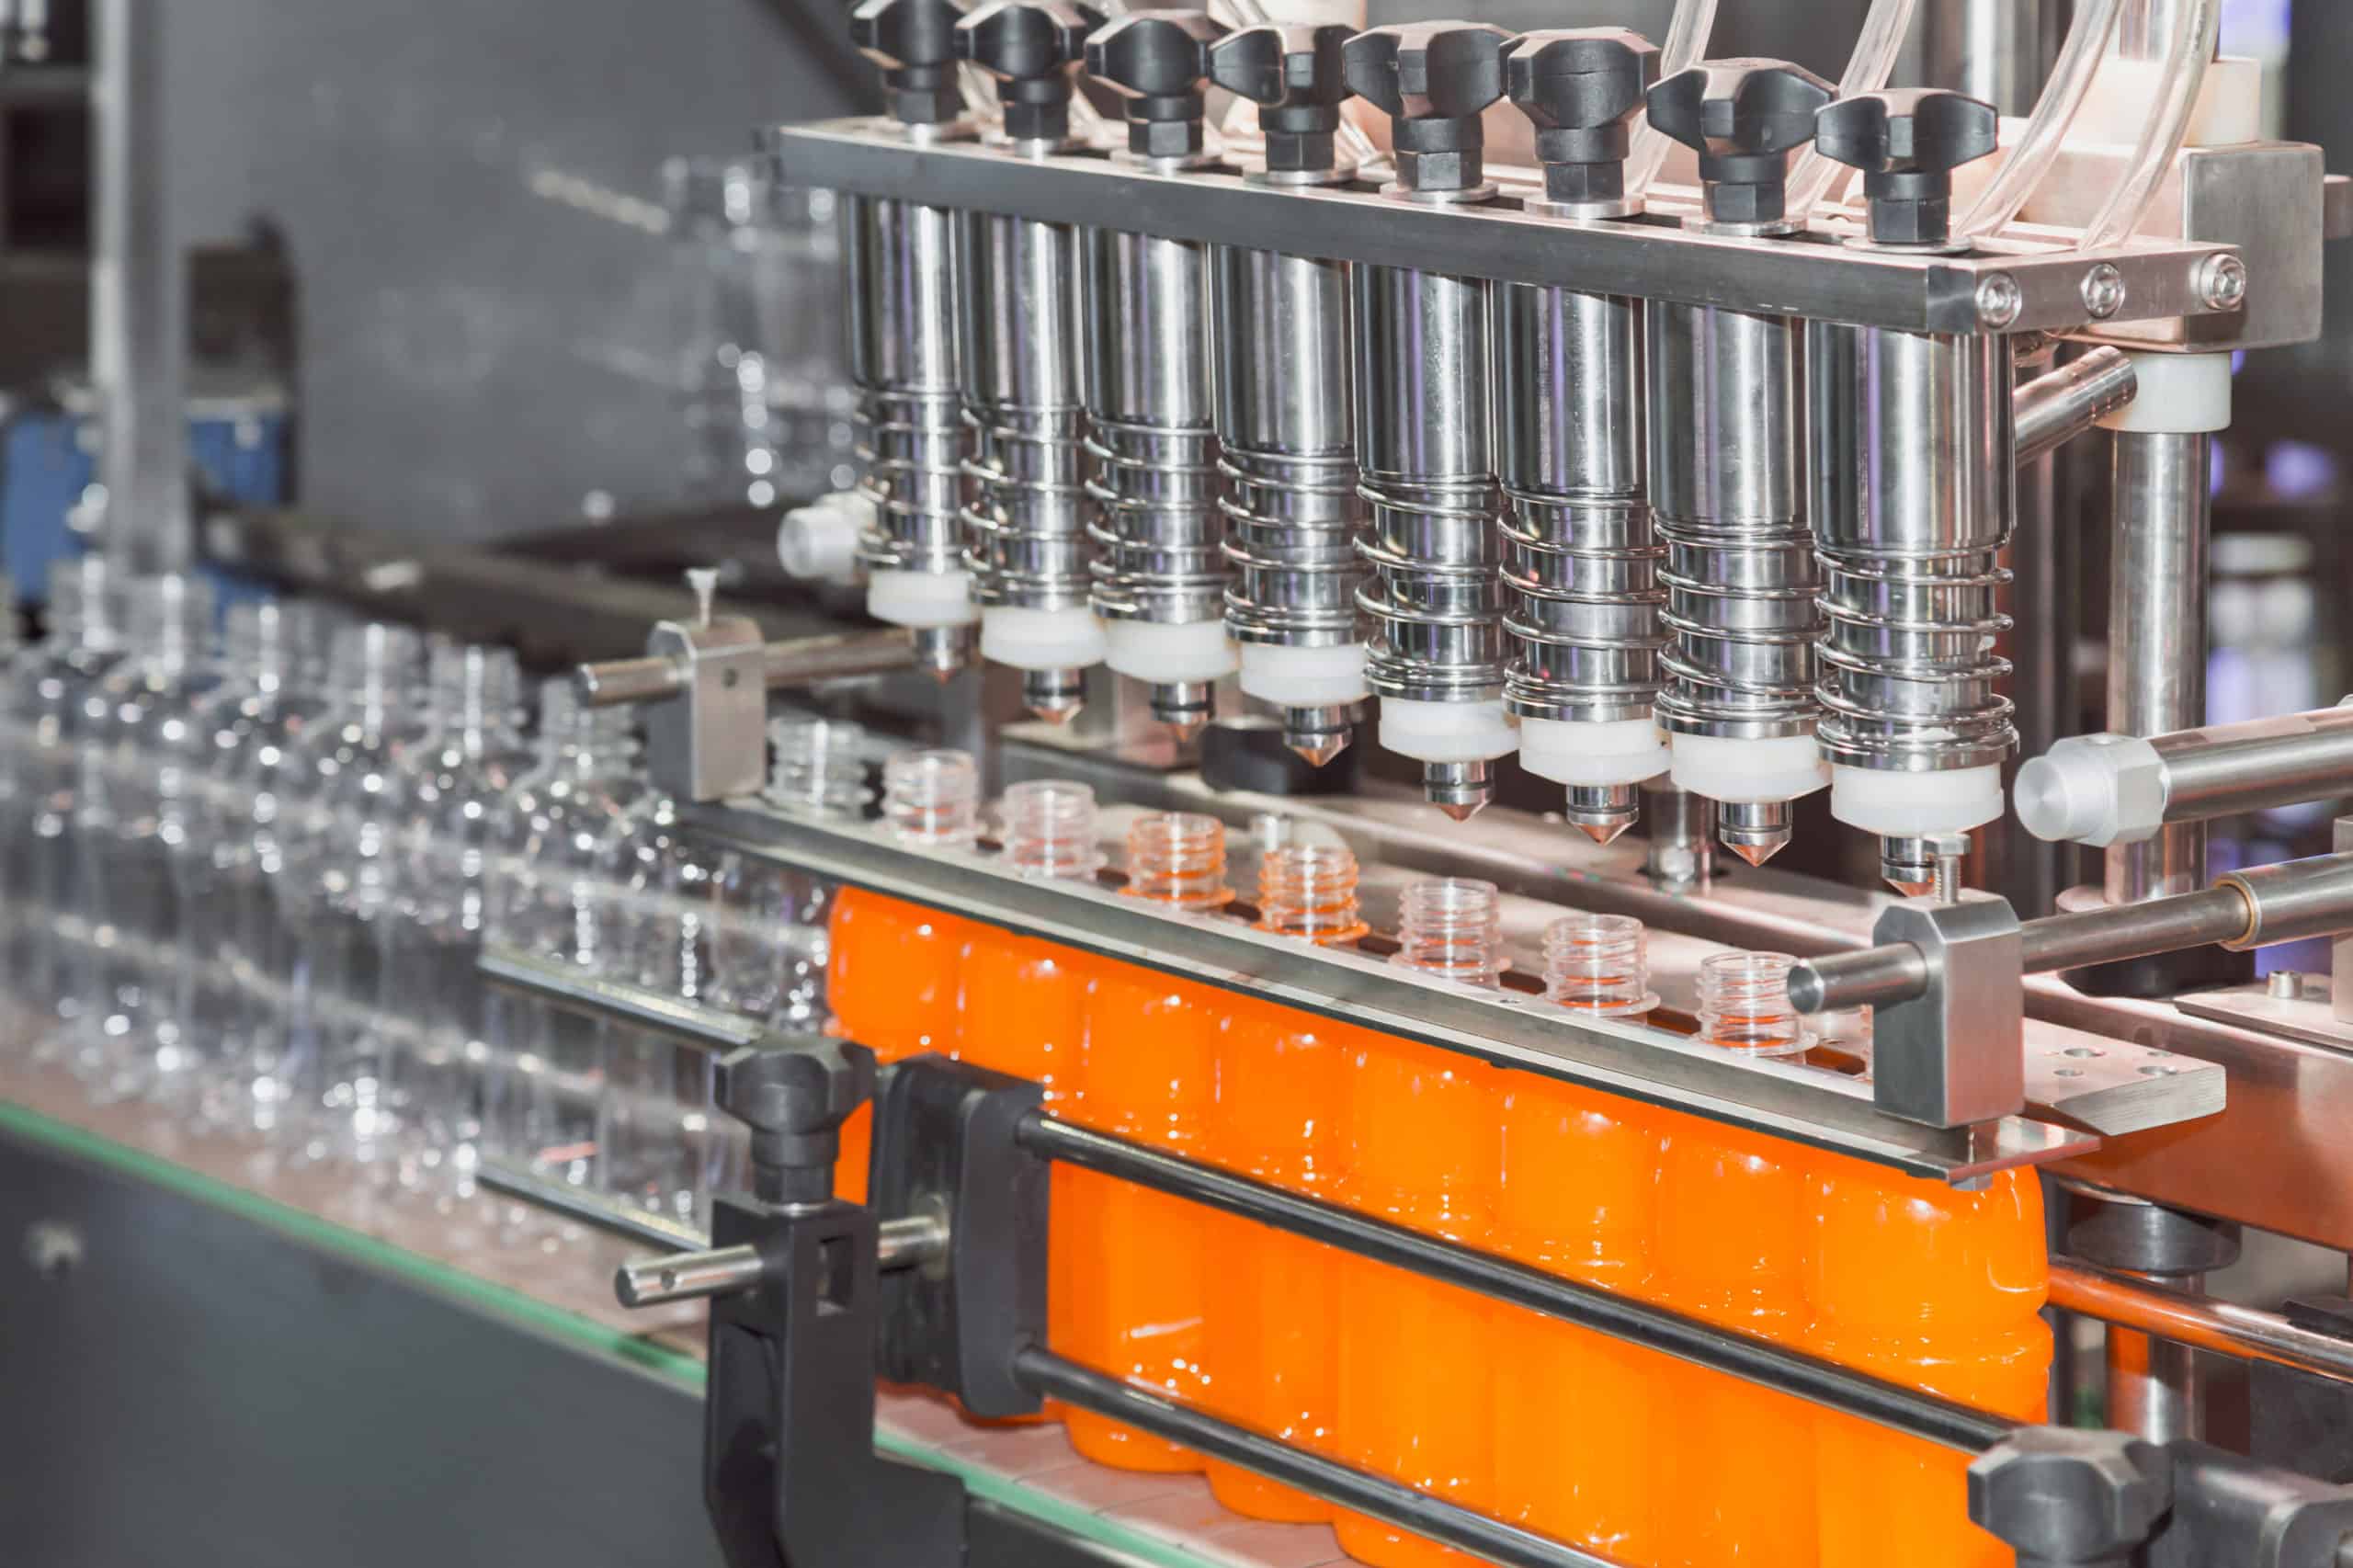 orange juice bottle on factory line machine in the factory, orange bottles transfer on conveyor belt system